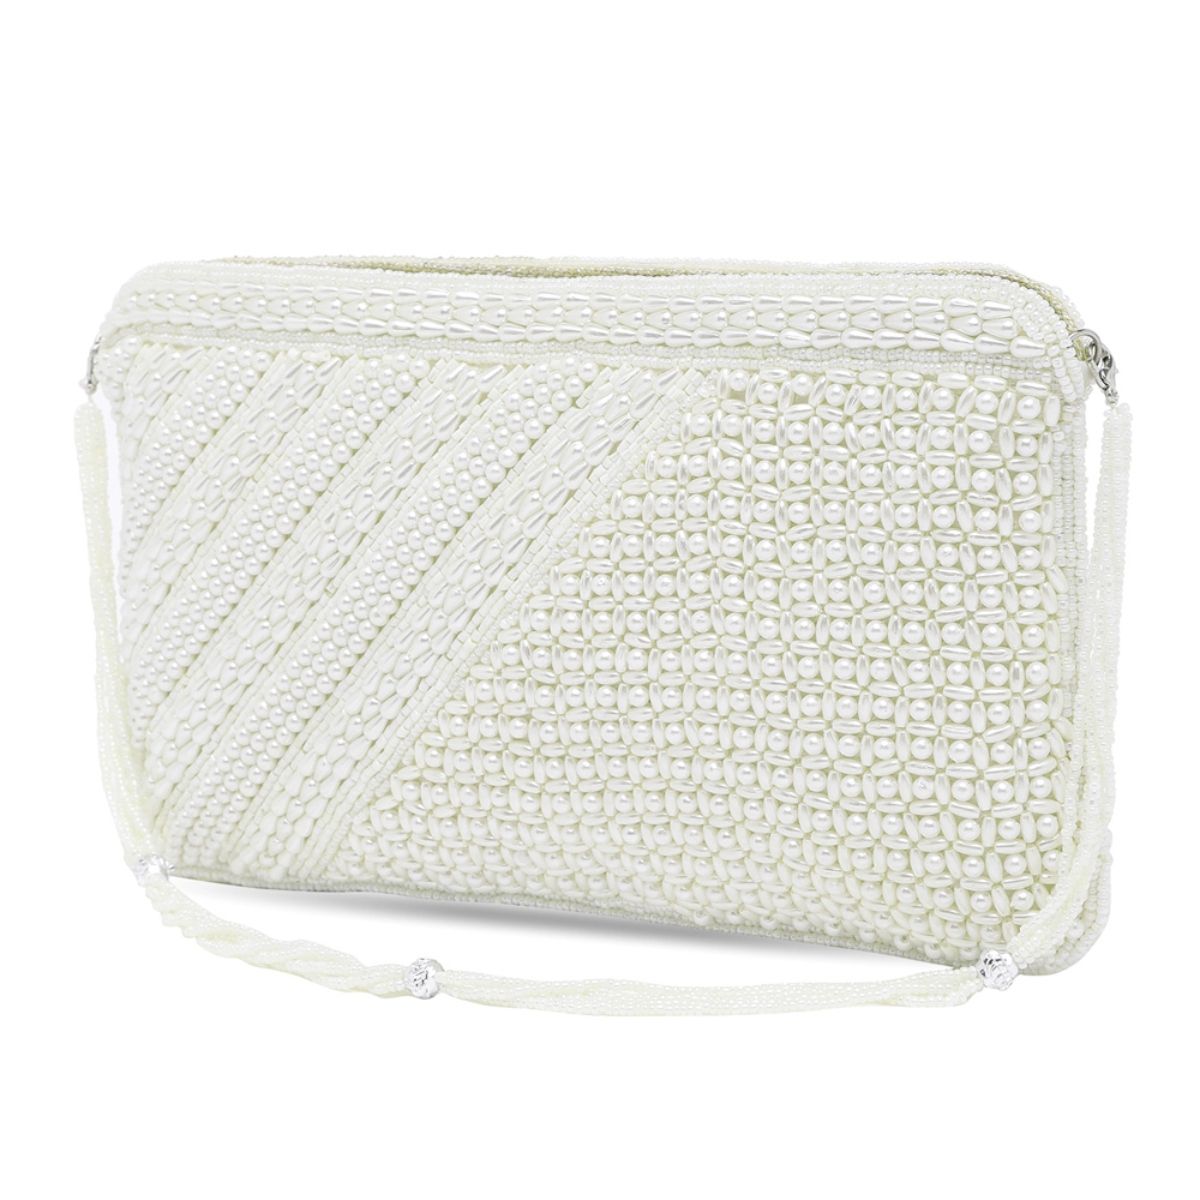 White Bridal Clutch | Fancy clutch purse, Beaded clutch purse, Fancy clutch